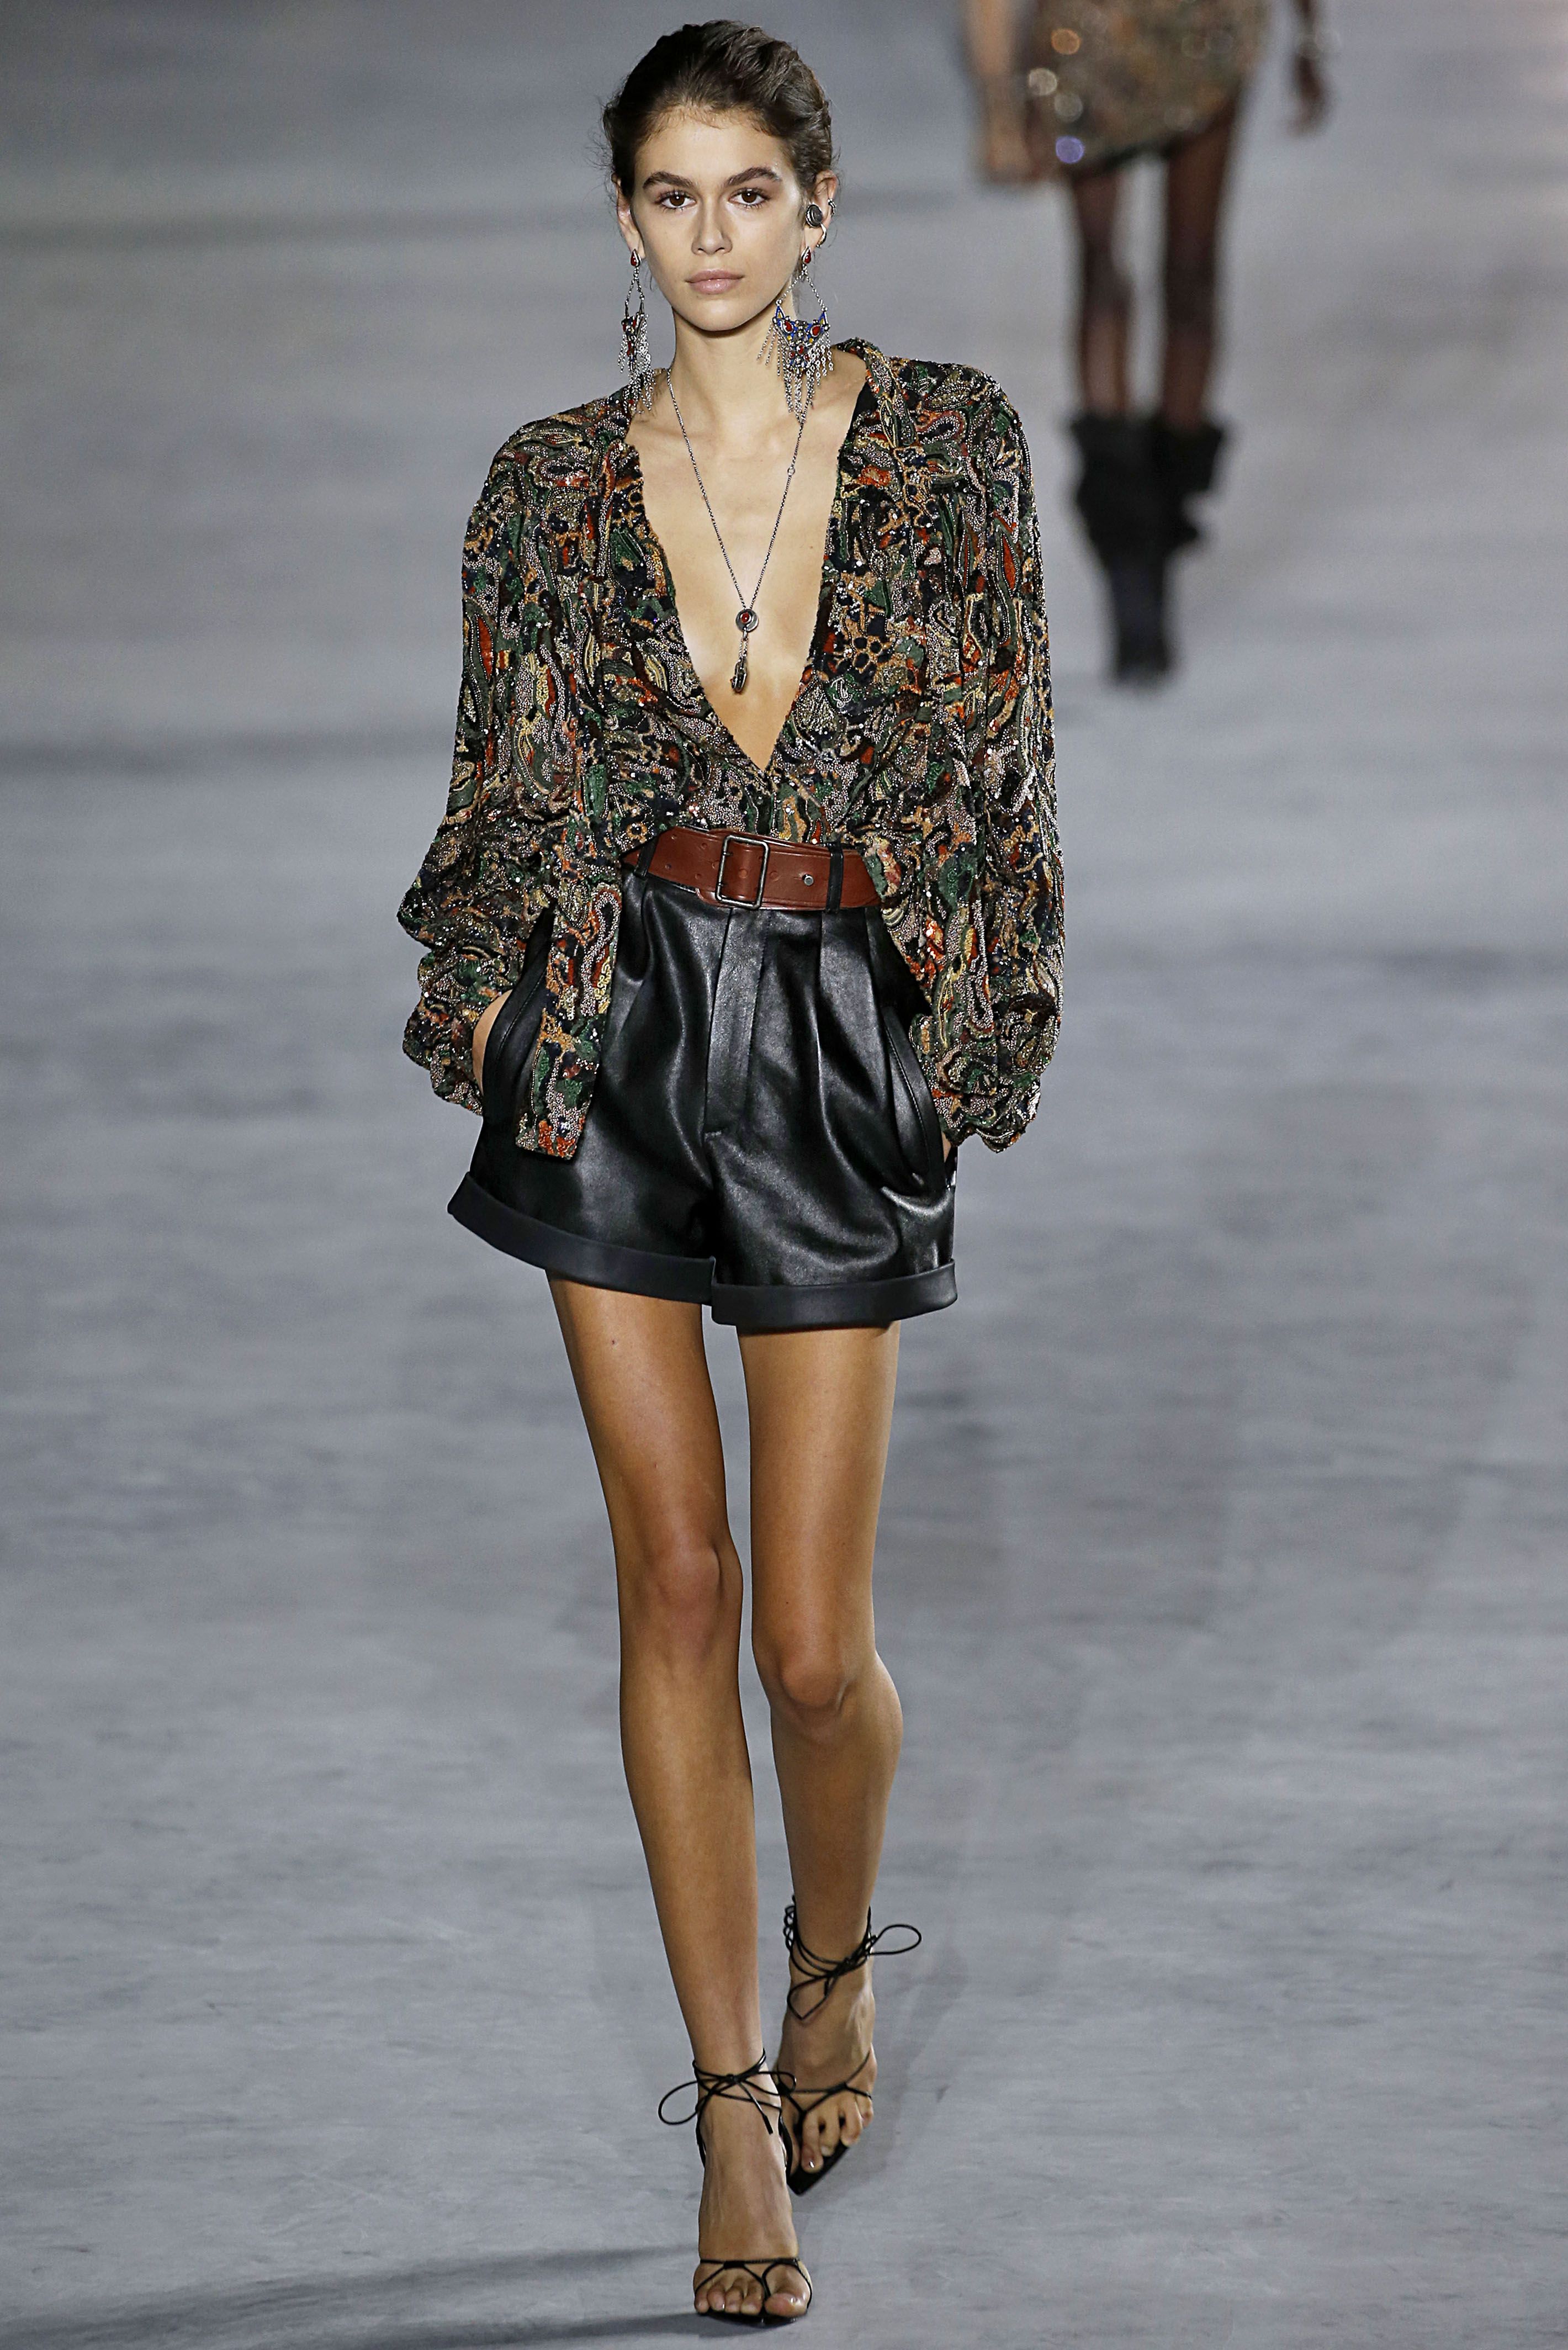 Kaia Gerber modelling for Louis Vuitton